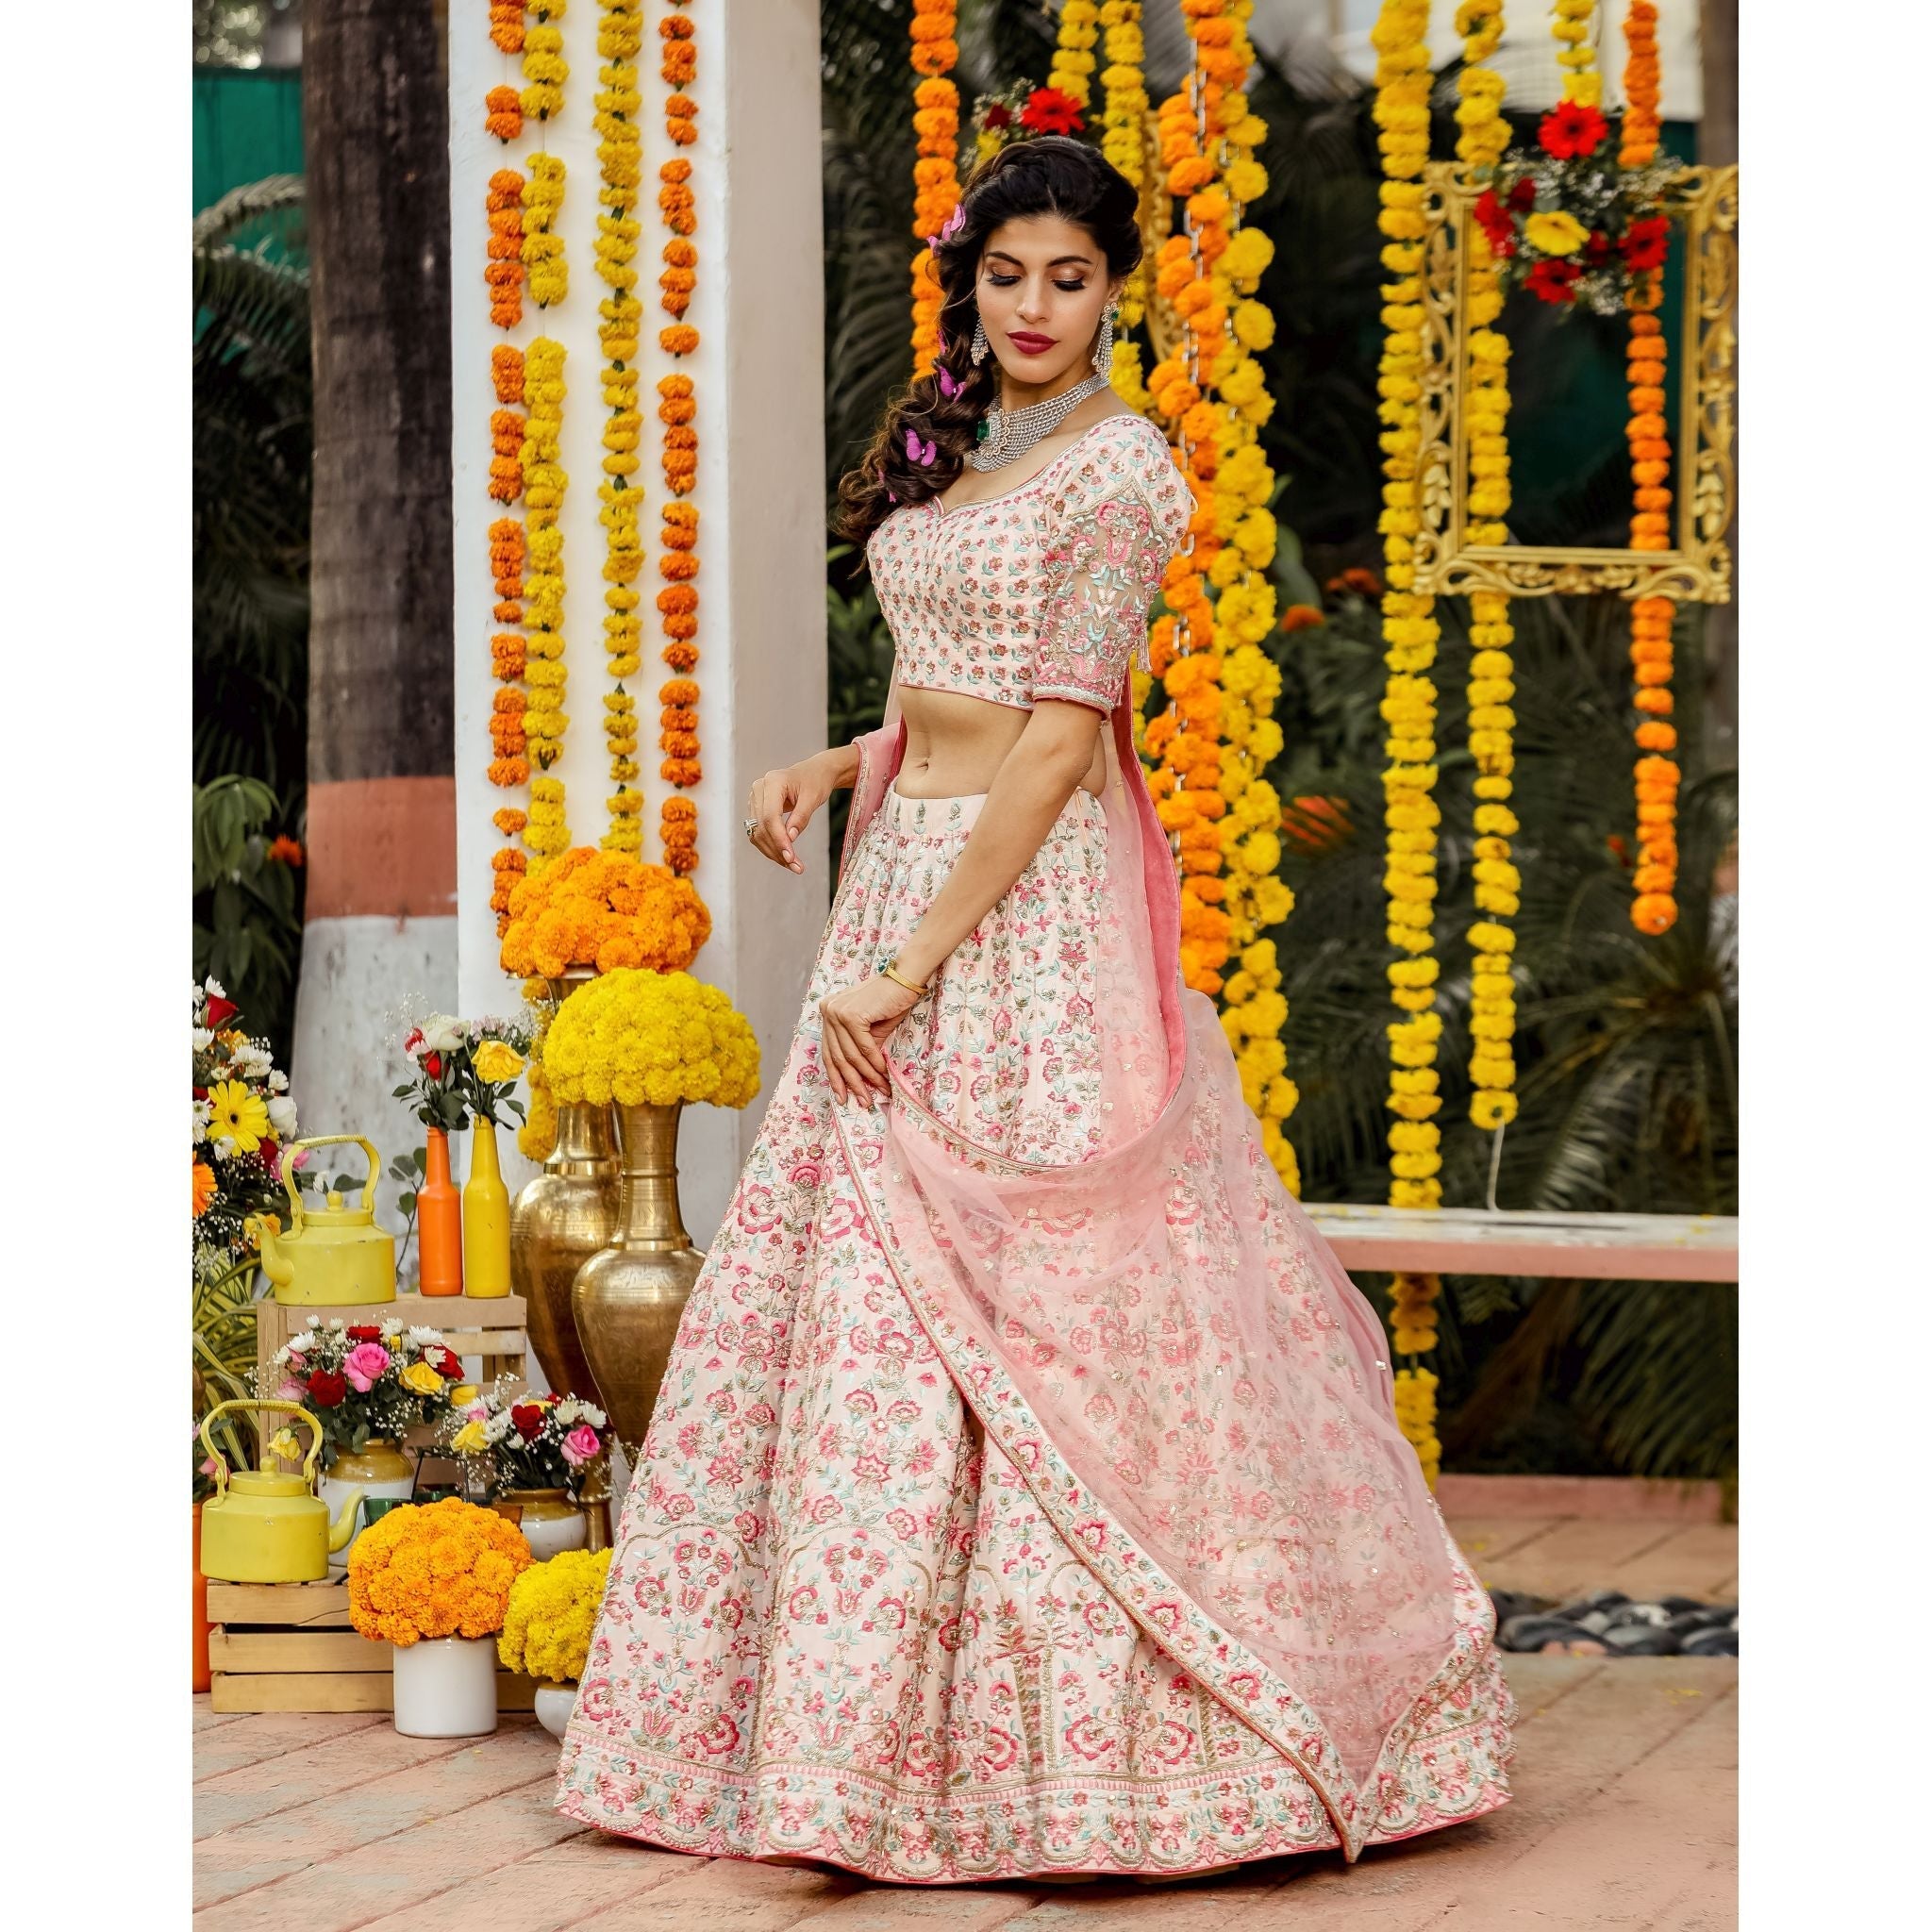 Pink Floral Lehenga Set - Indian Designer Bridal Wedding Outfit